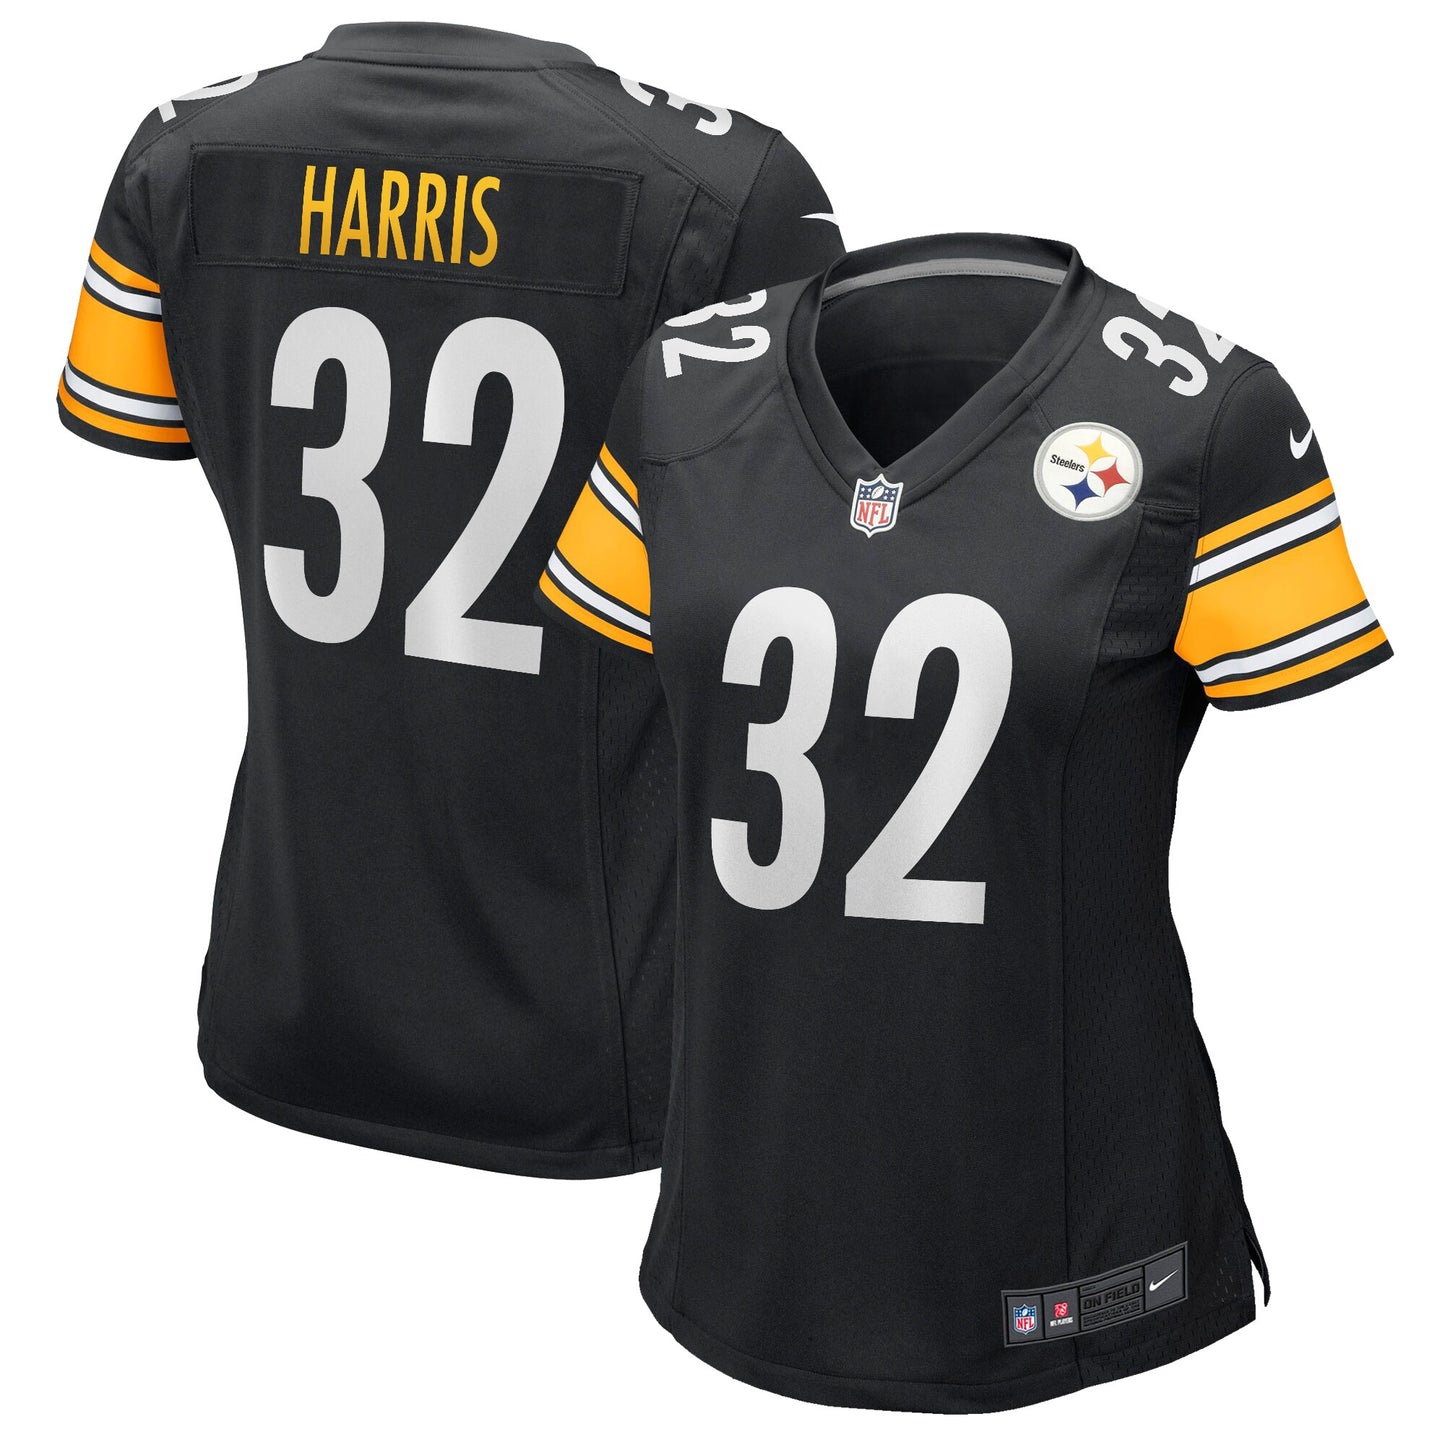 Franco Harris Pittsburgh Steelers Nike Women's Game Retired Player Jersey - Black